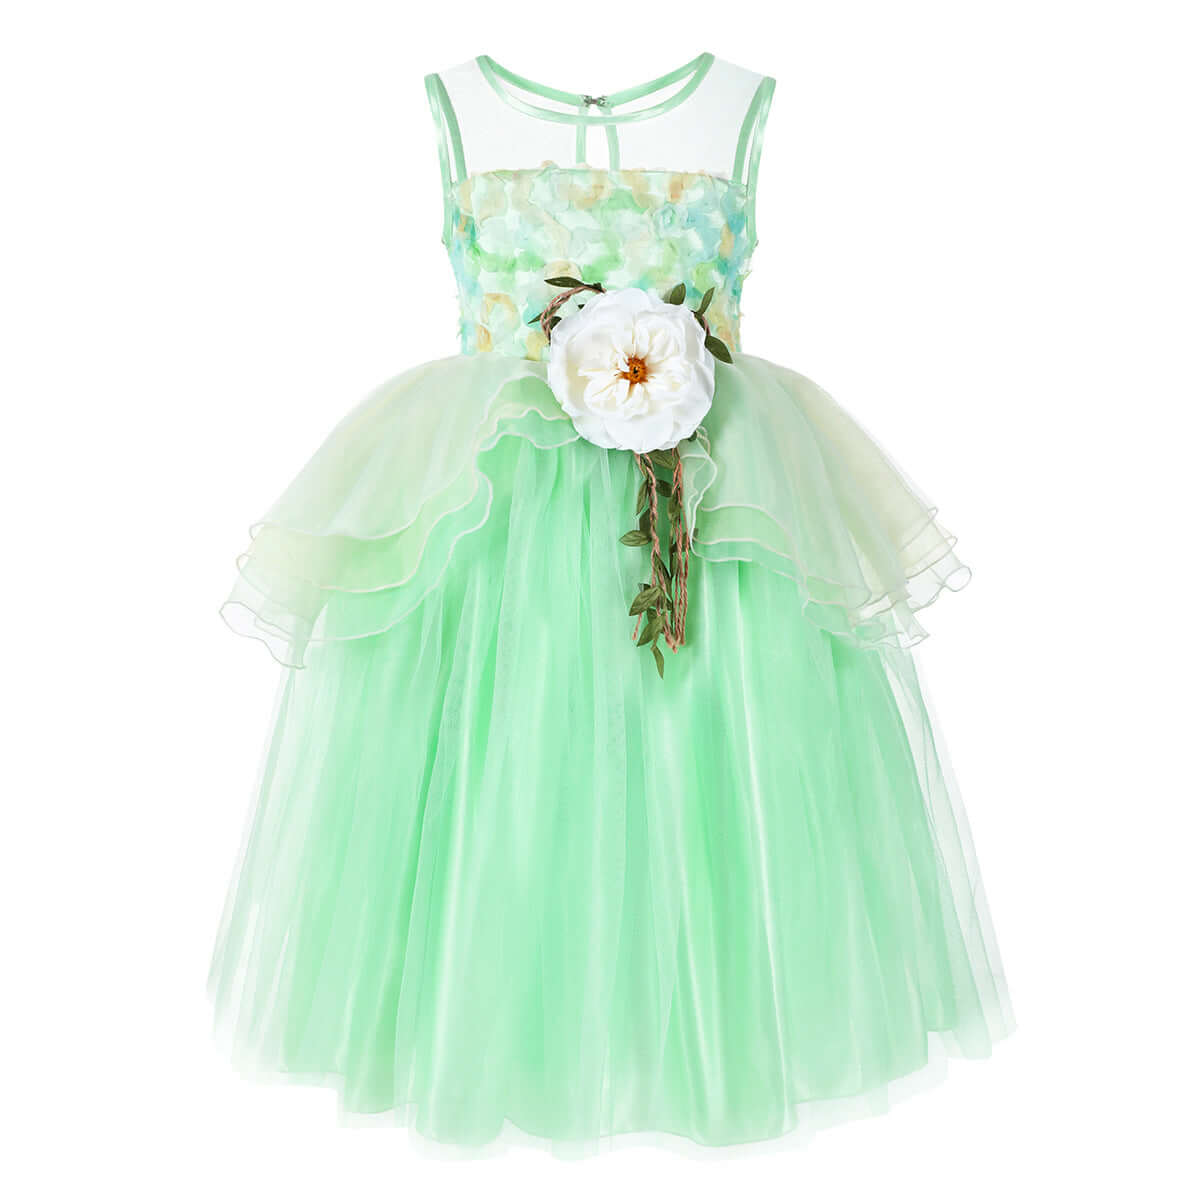 Frog prince princess tutu skirt halloween tiana Tiana cosplay costumes forest fairy tulle skirt